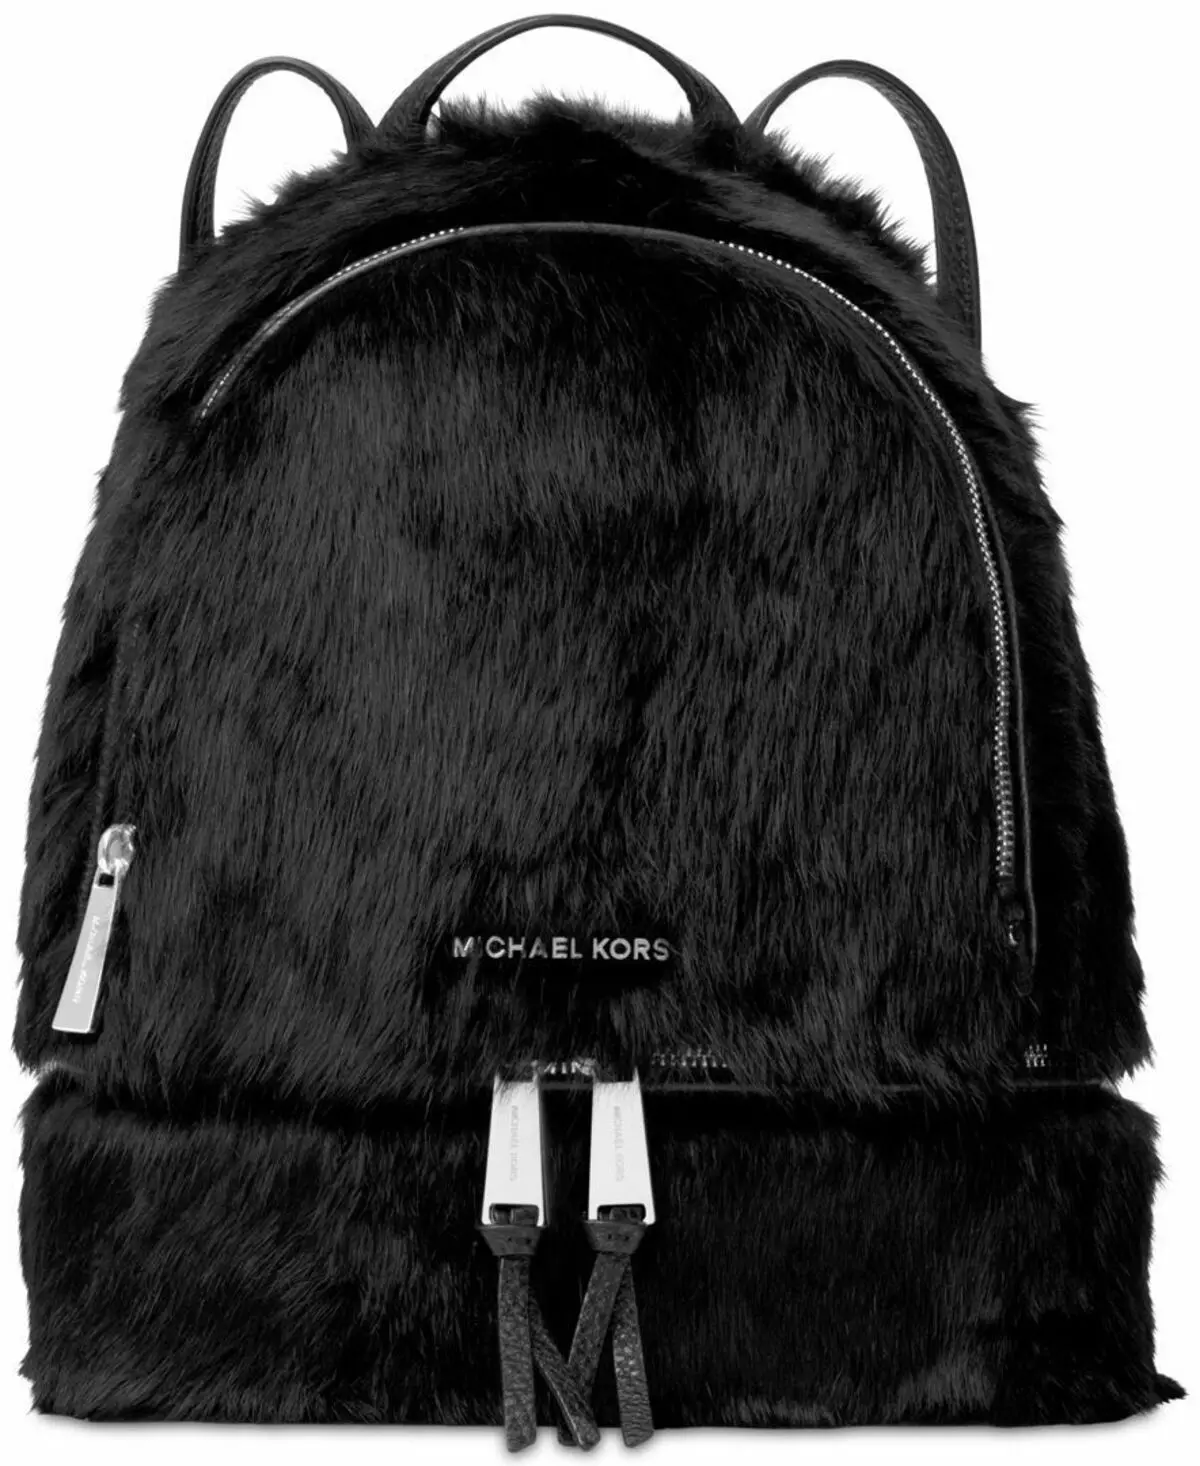 Black Backpacks (75 fotografija): Ženski modeli, male i velike, ruksak vrećice i moderan redovni lanac naprtnjače, s natpisom i monofoni 2567_35